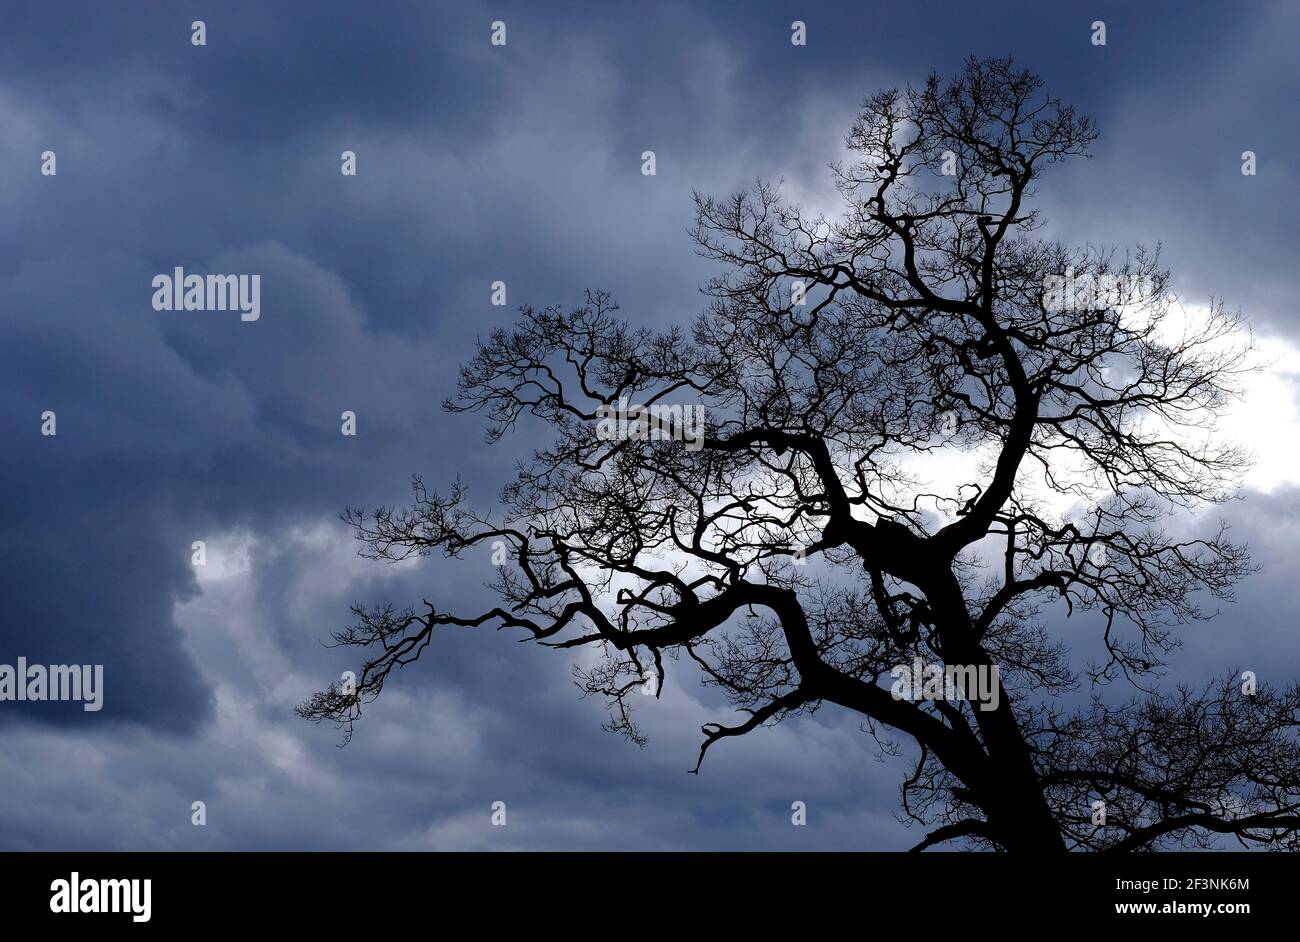 winter silhouette of old oak tree on dark stormy sky Stock Photo